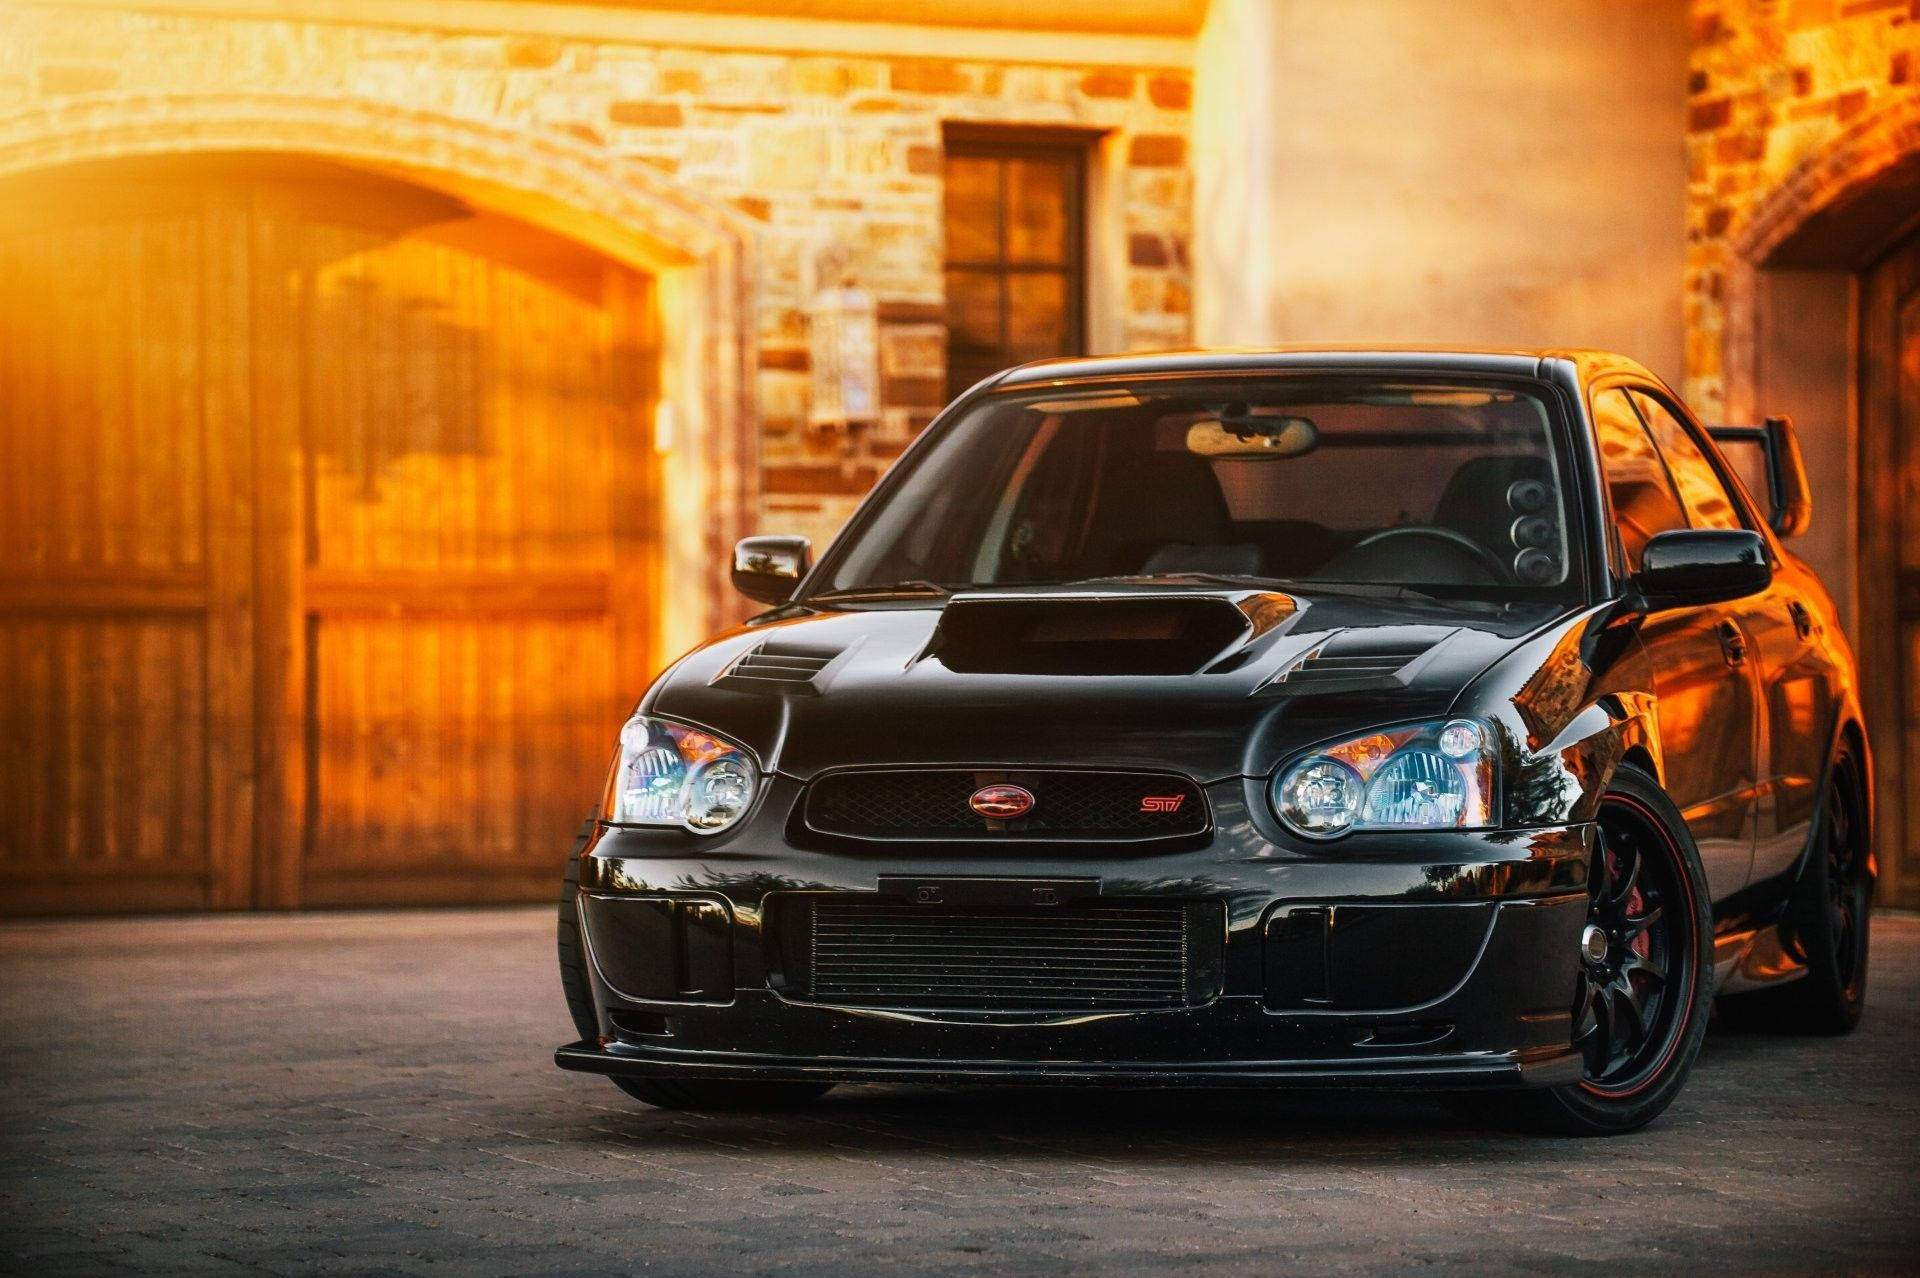 Majestic Subaru In Pitch Black Paint Background